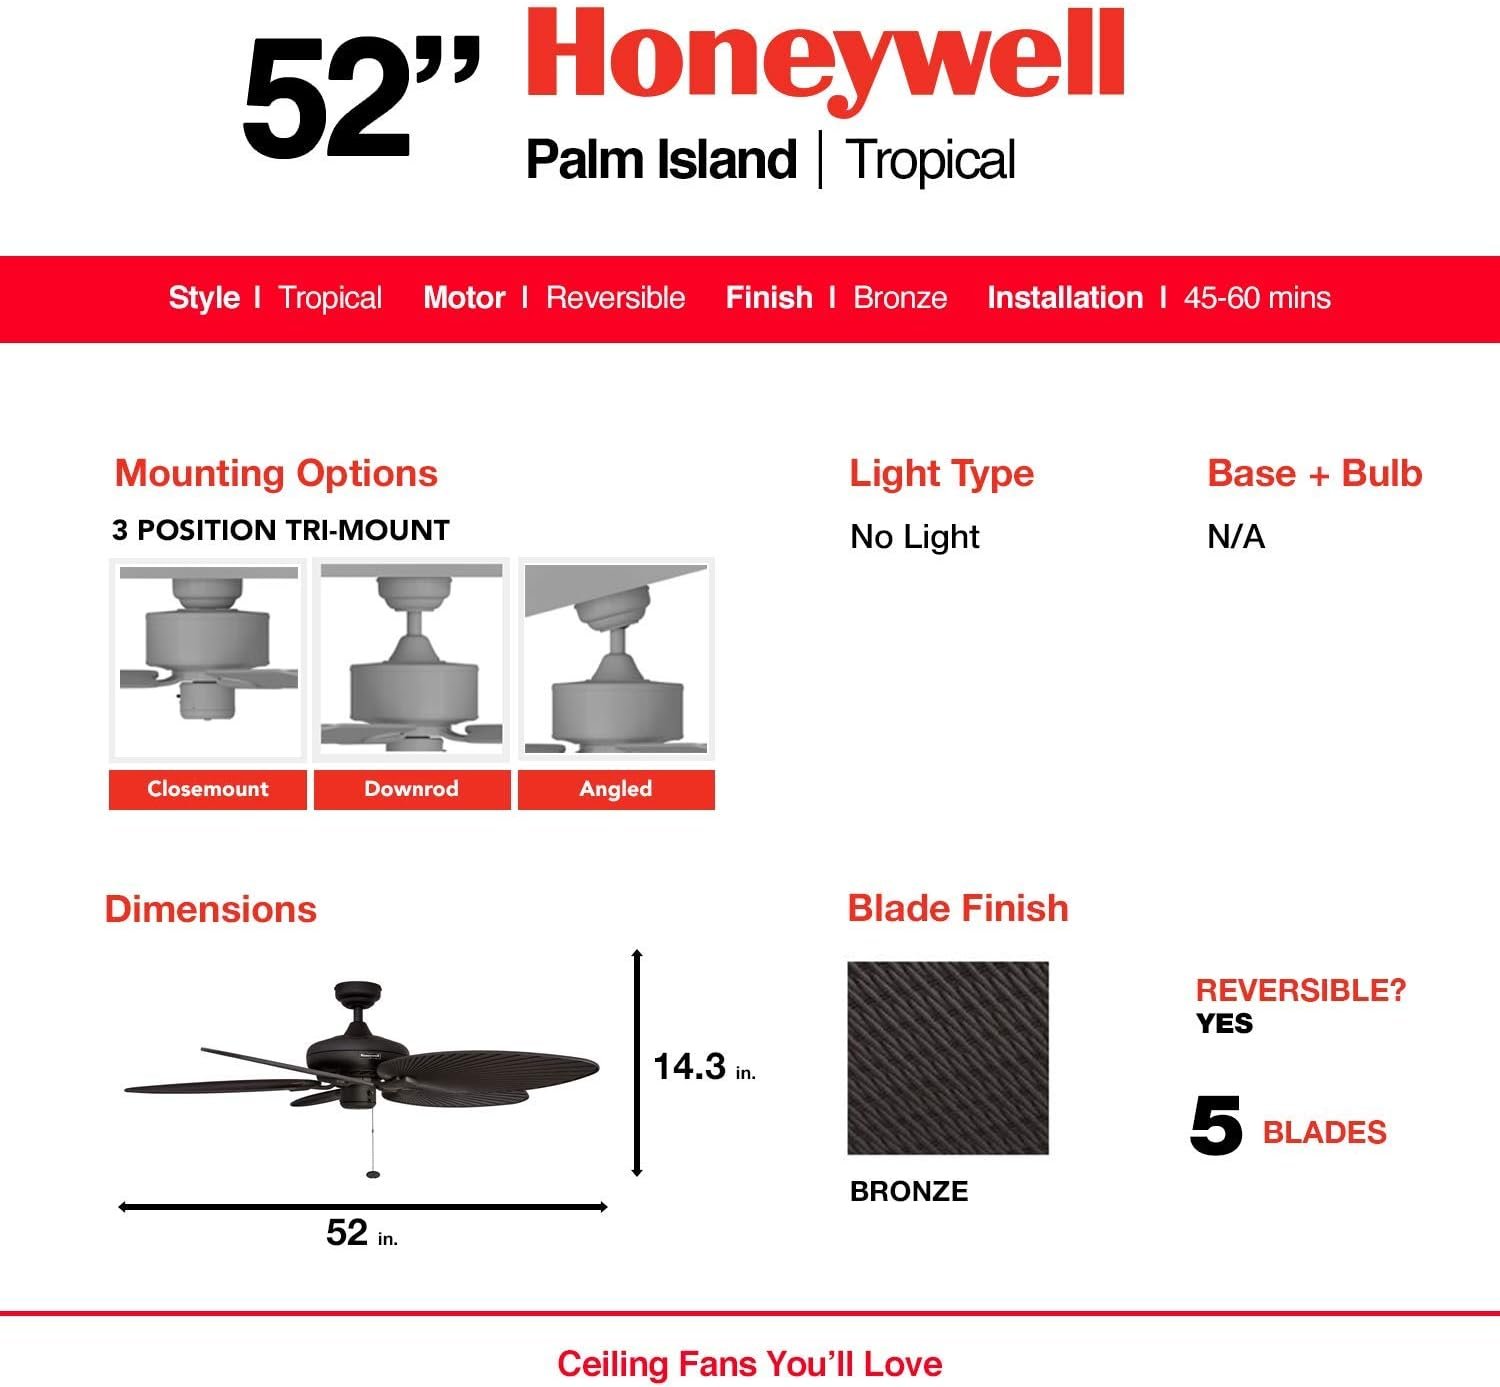 Honeywell Palm Island Ceiling Fan Review